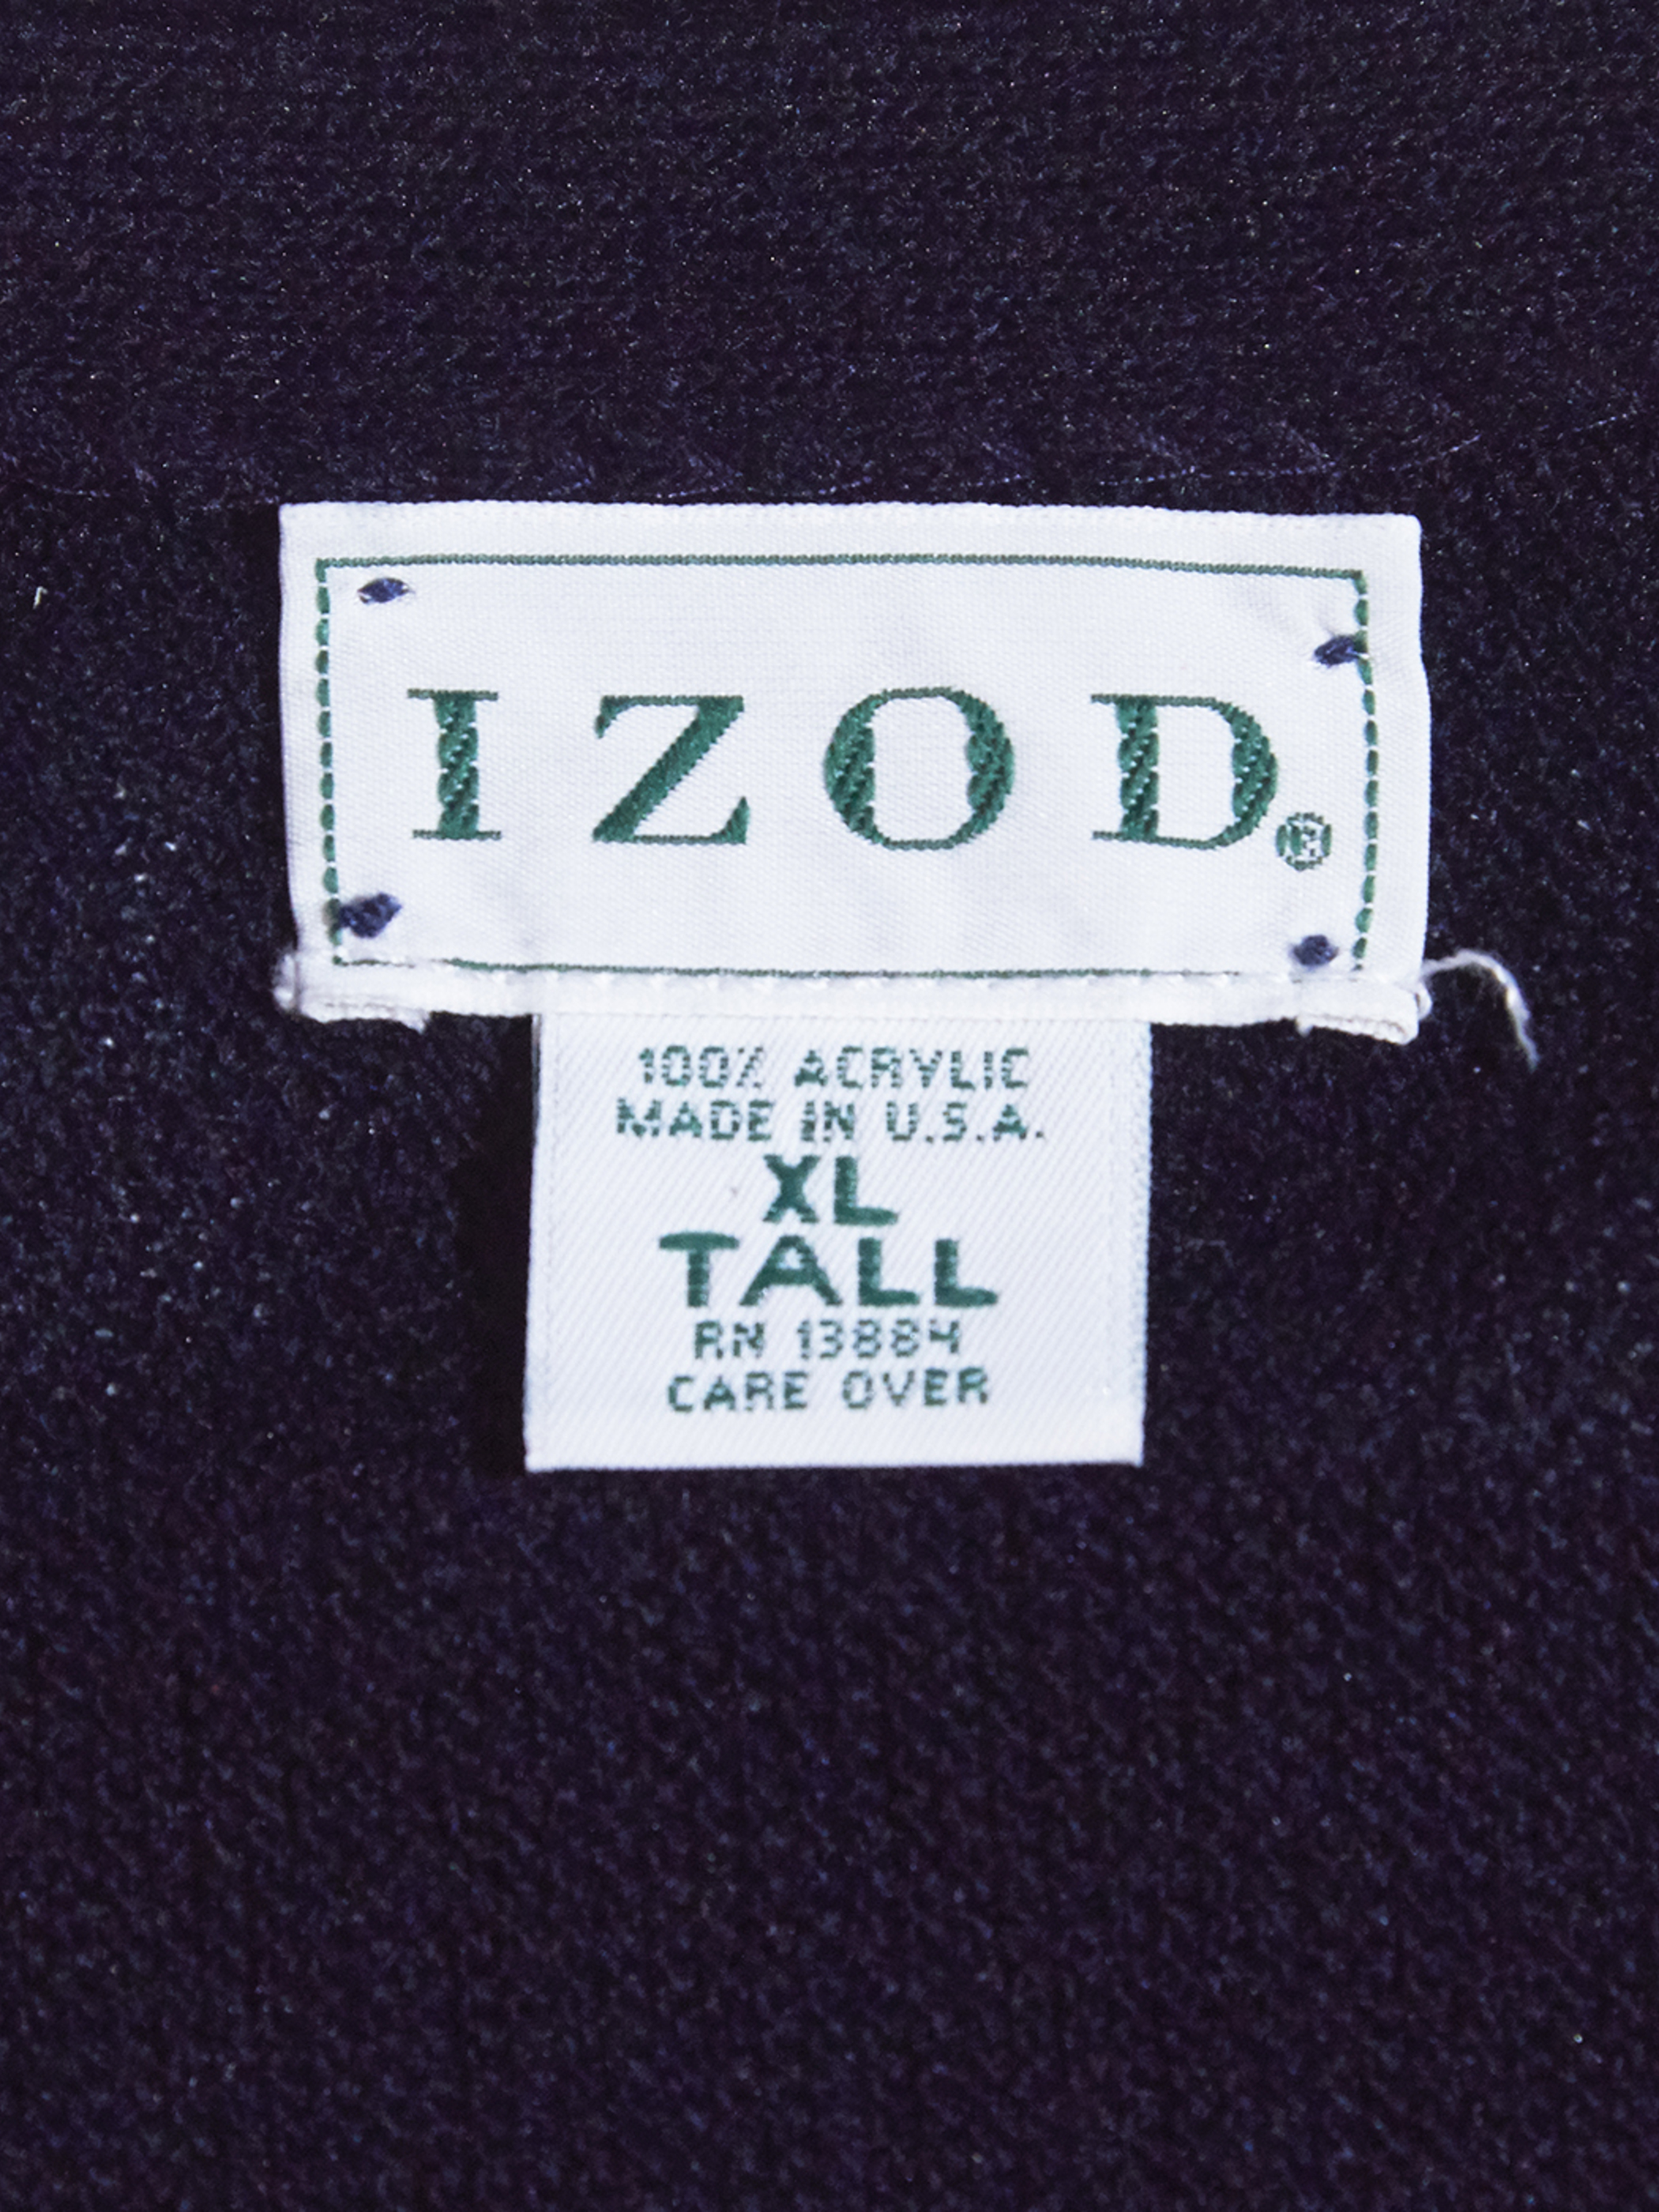 1980s "IZOD" acrylic knit cardigan -DARK NAVY-